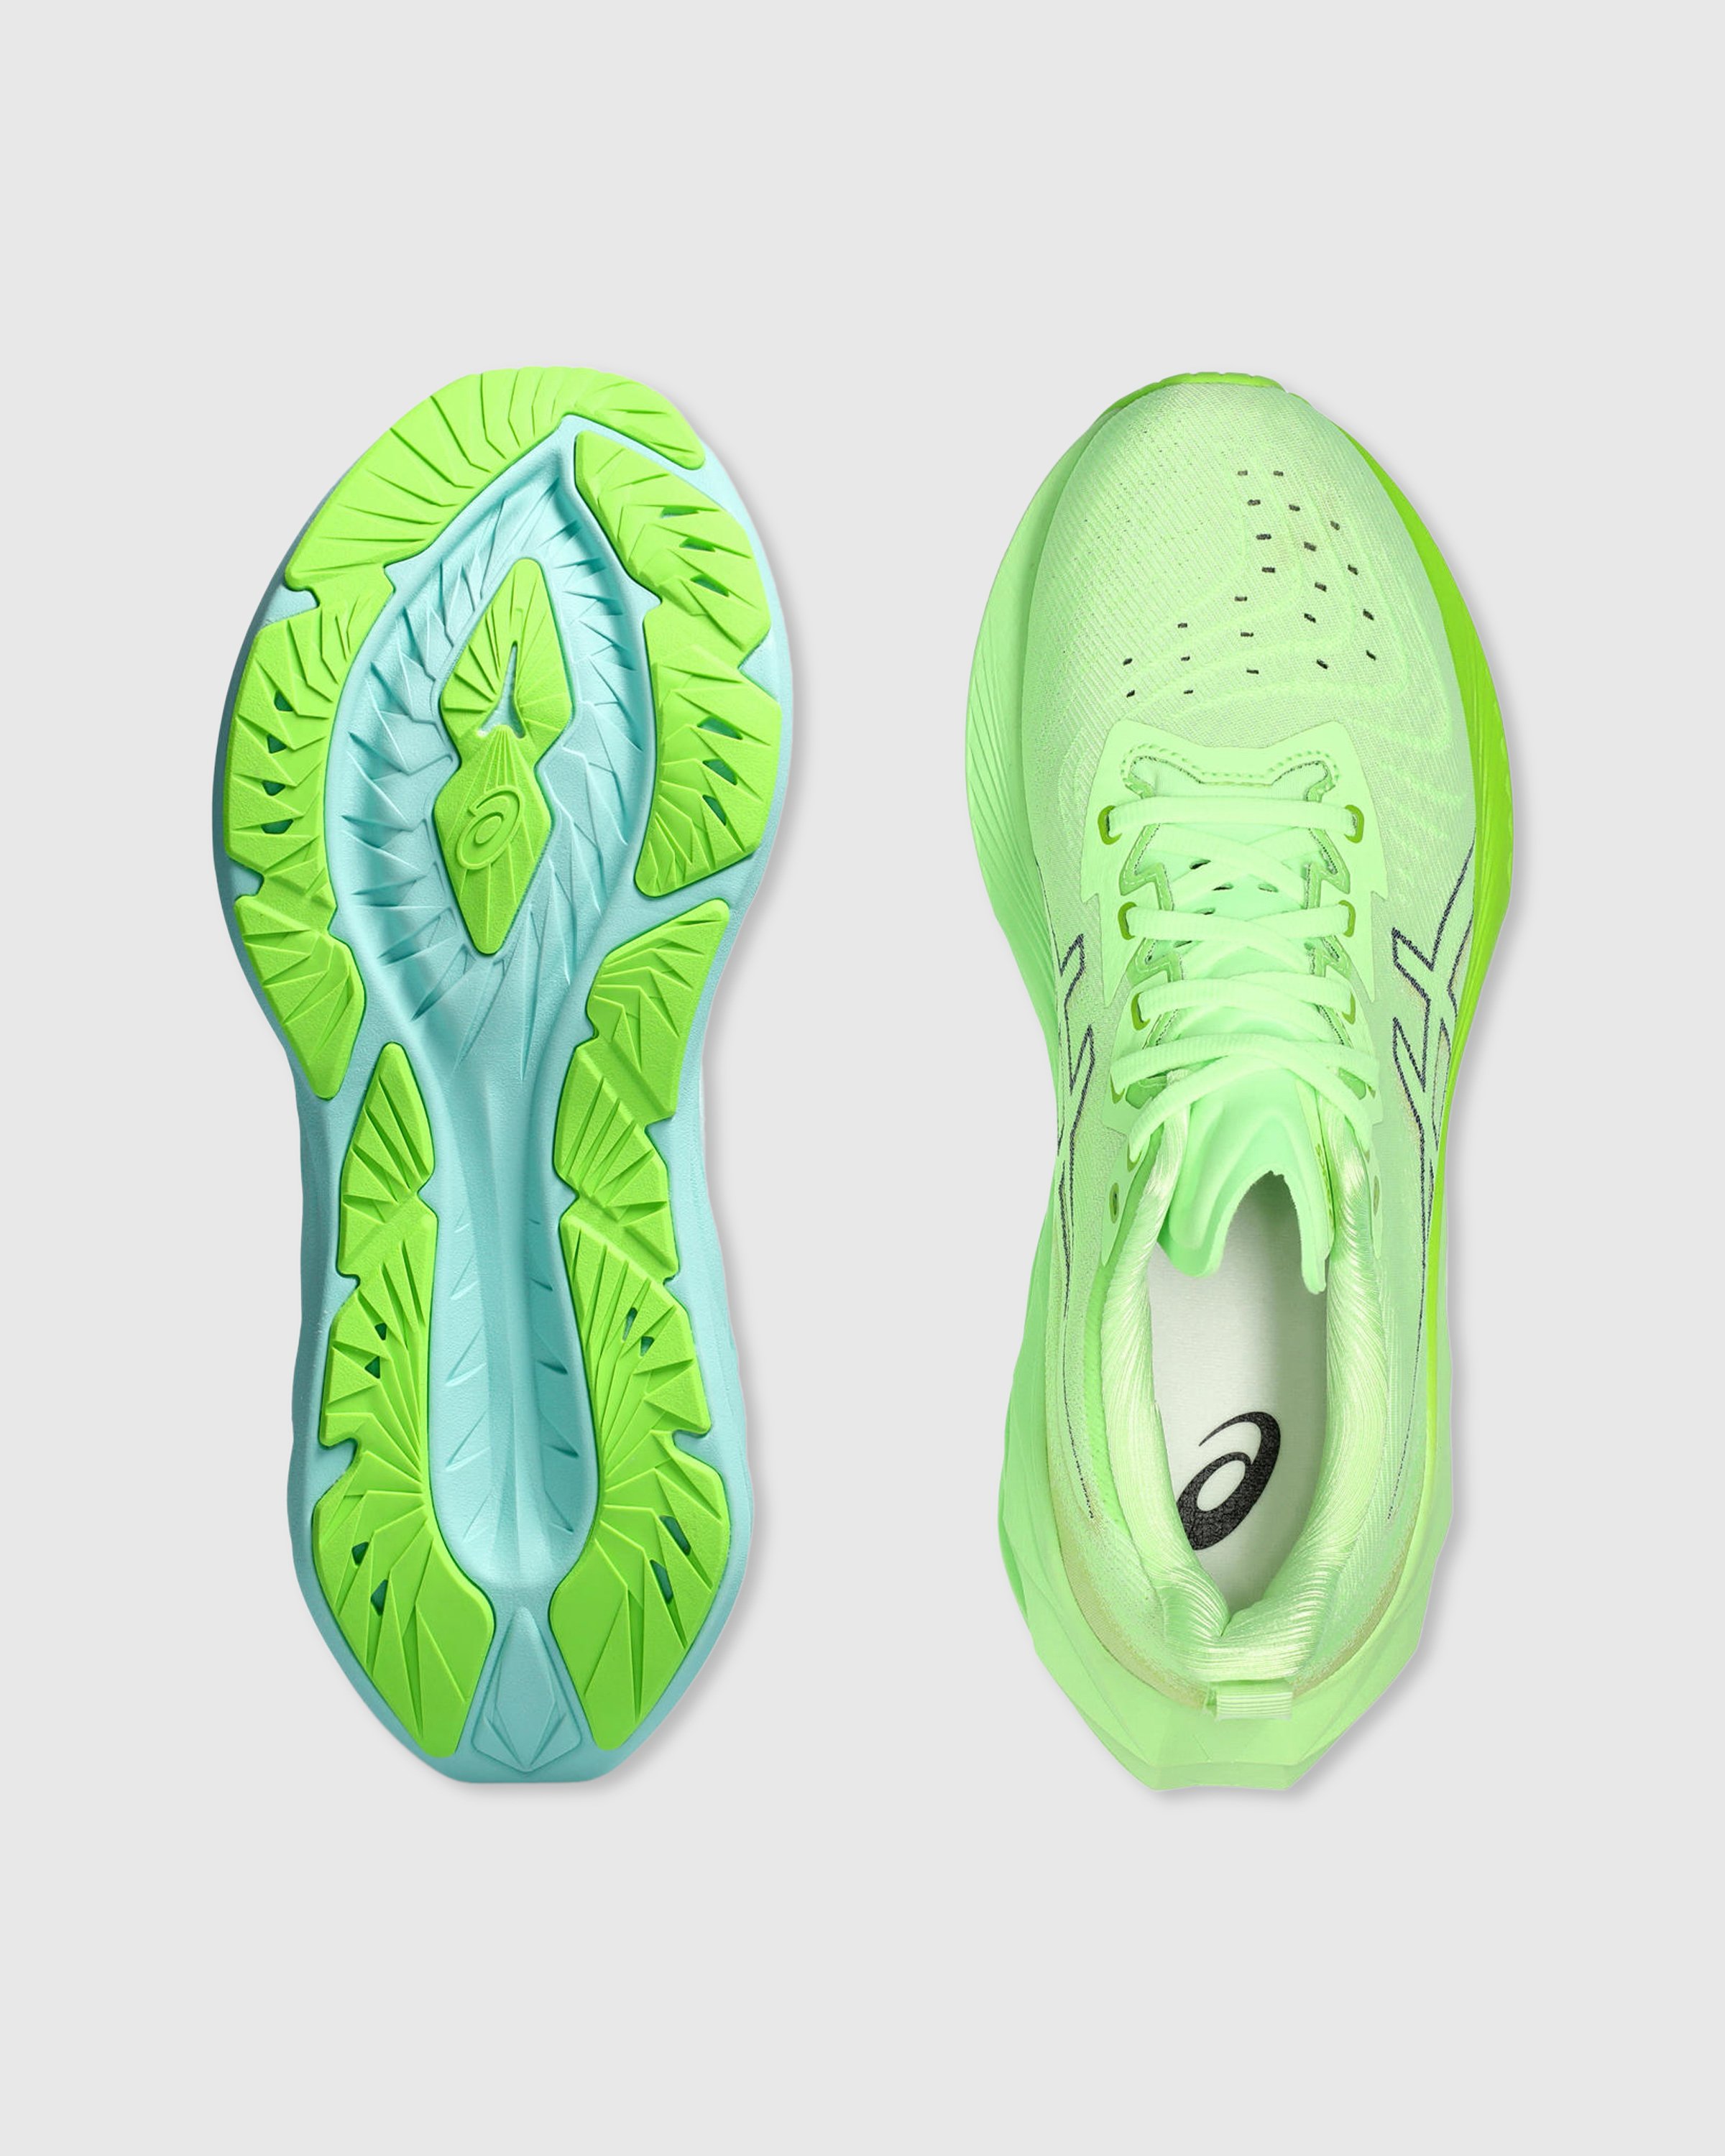 asics - NOVABLAST 4 Illuminate Green/Lime Burst - Footwear - Green - Image 6